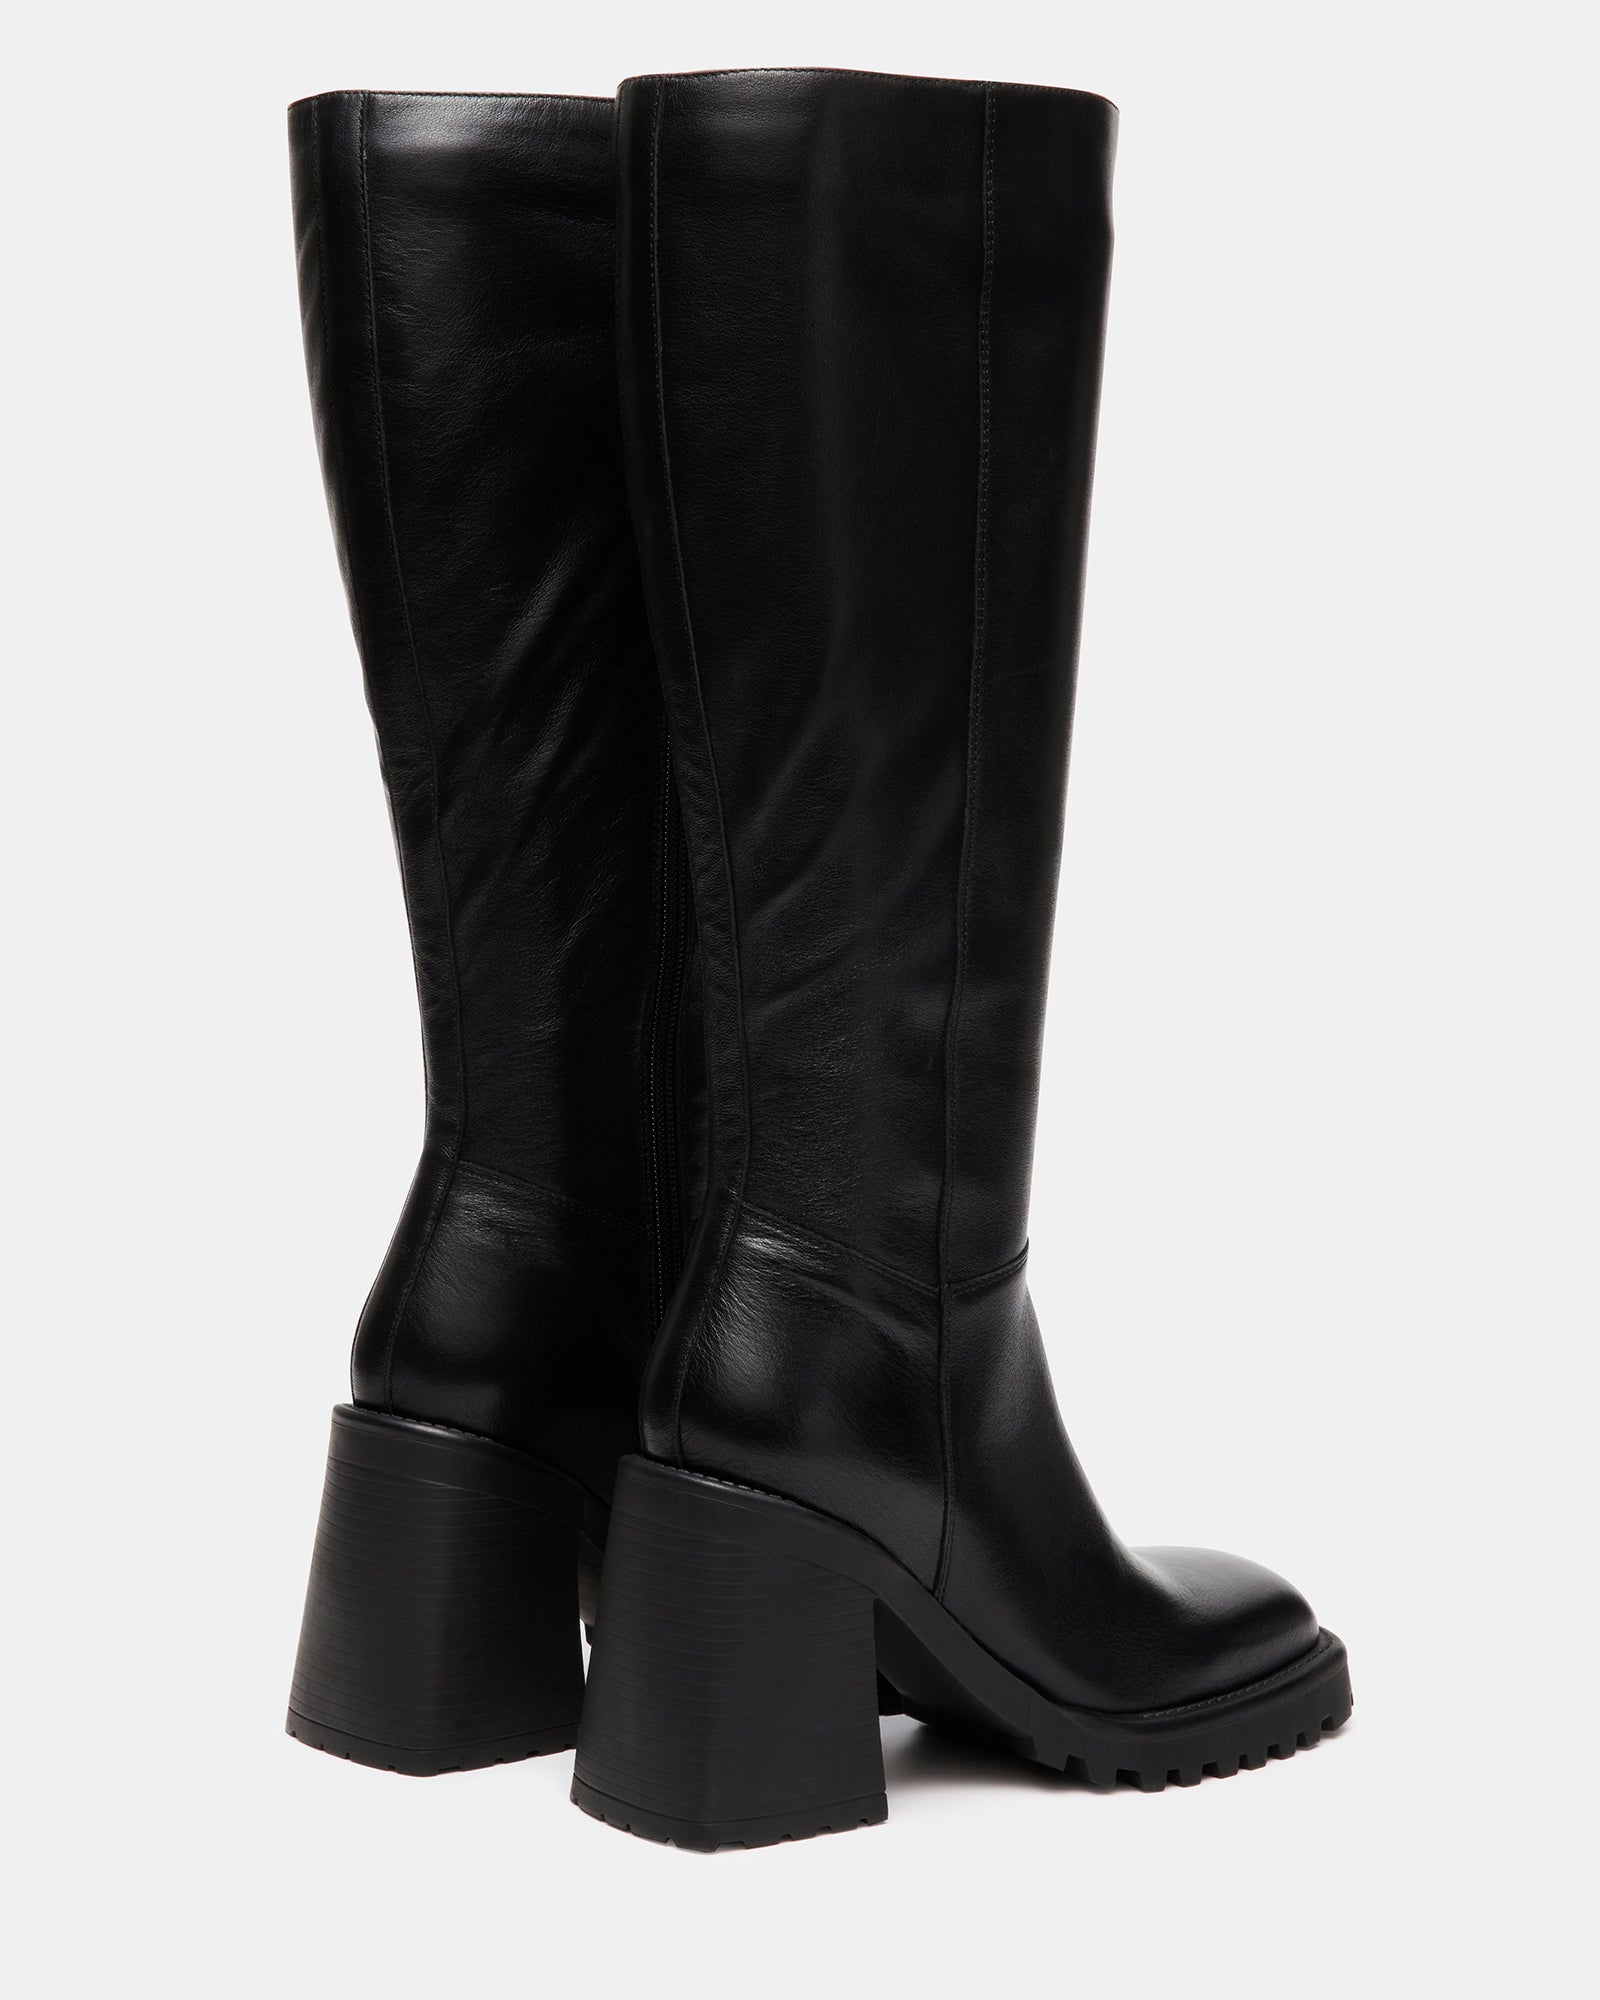 VIOLET Black Leather Knee High Block Heel Boot | Women's Boots – Steve ...